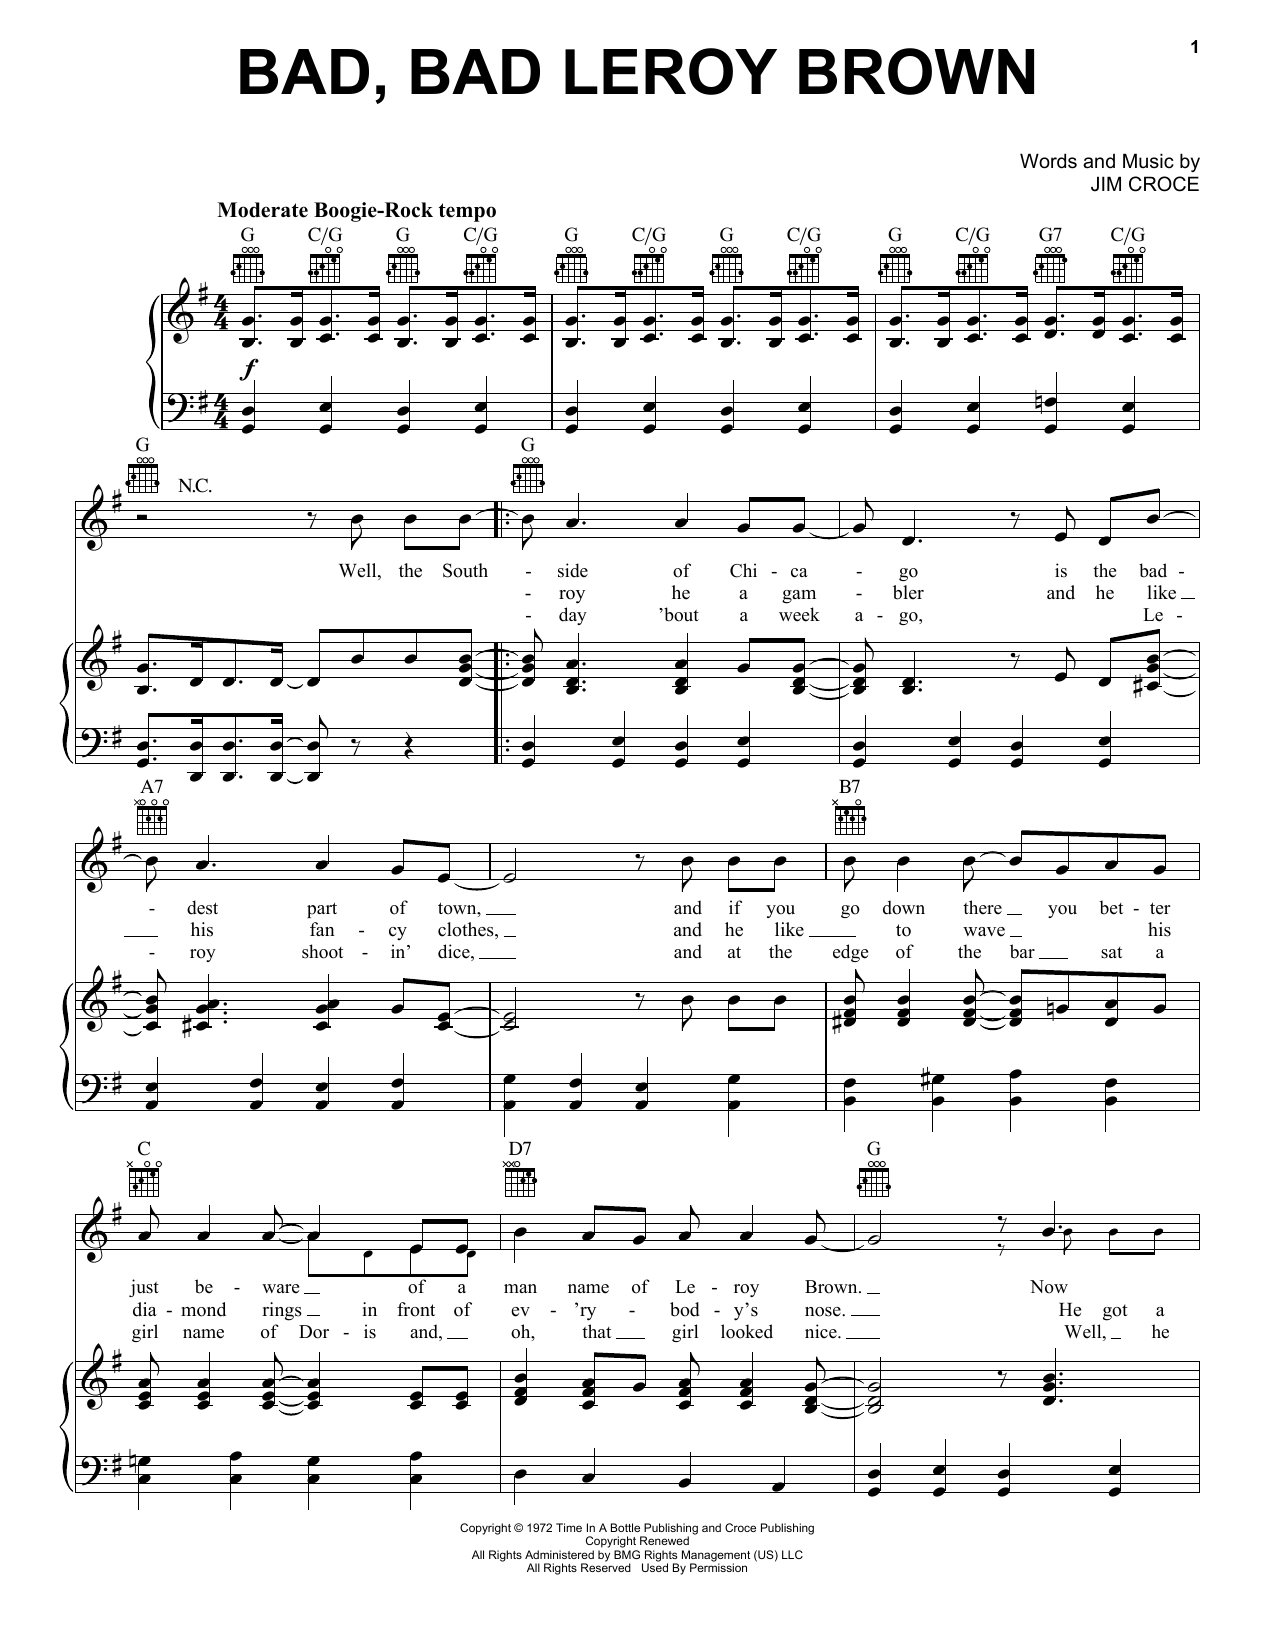 Jim Croce Bad, Bad Leroy Brown Sheet Music Notes & Chords for Viola - Download or Print PDF